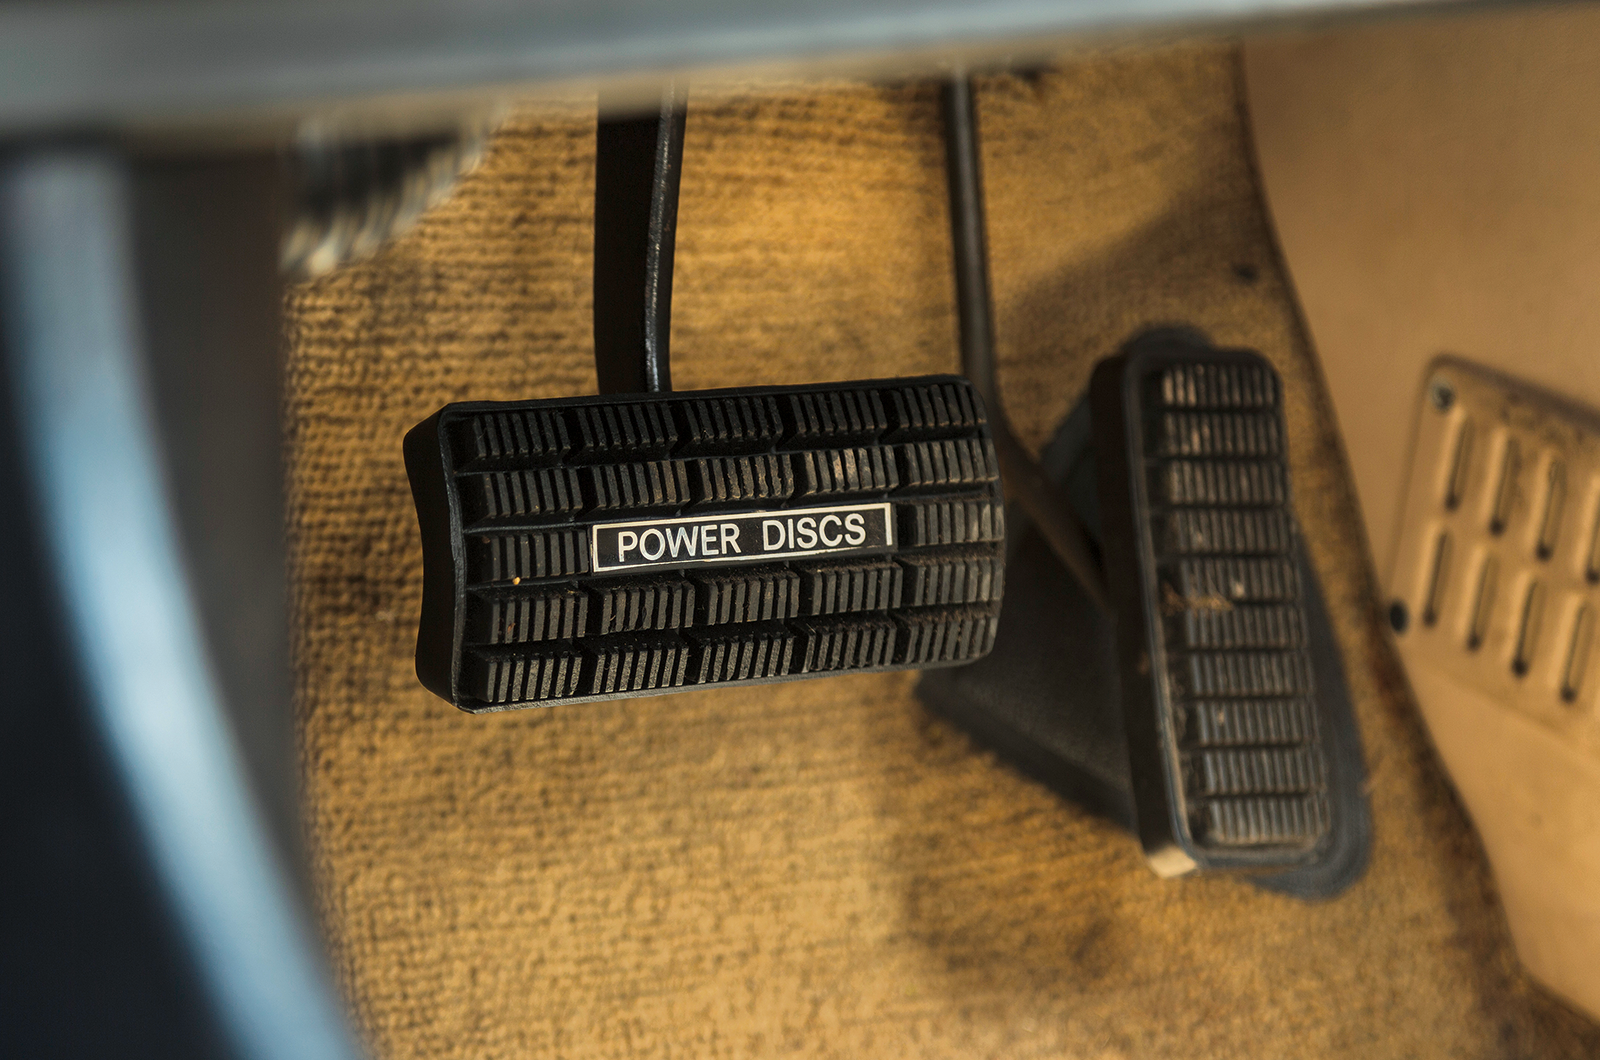 Classic & Sports Car – Leyland P76: a great Briton Down Under